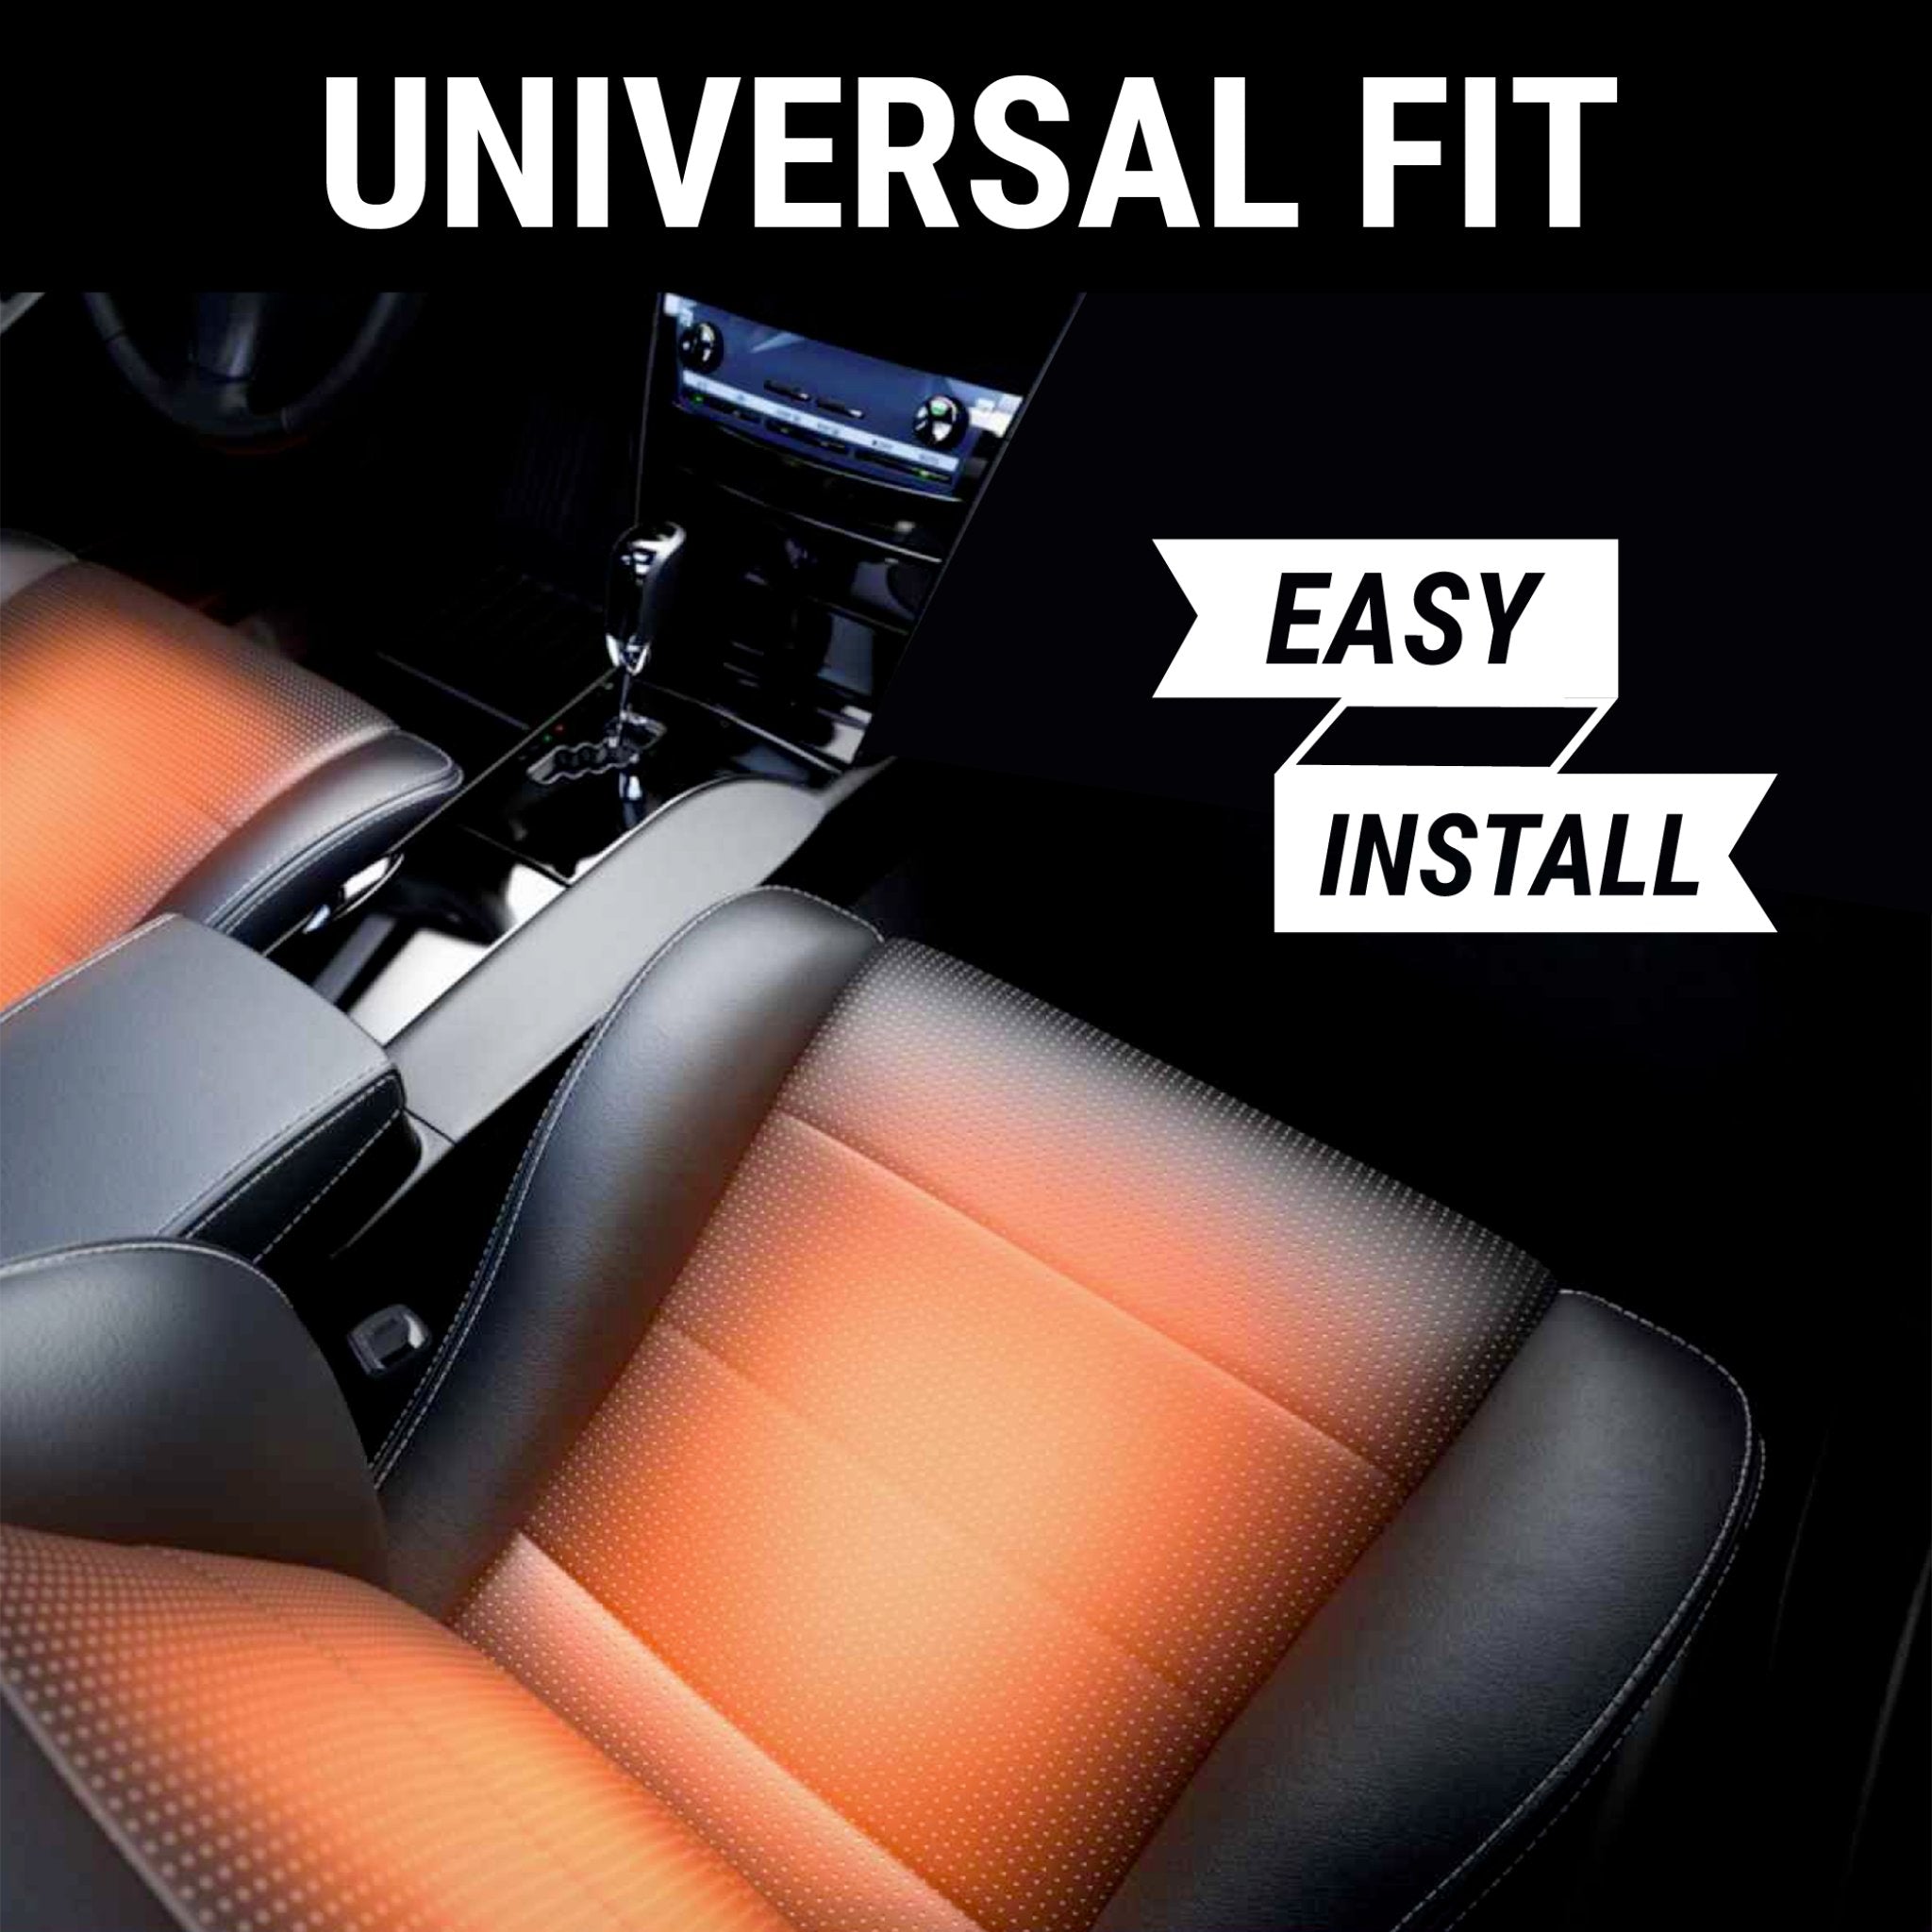 Universal 12V Car Heated Seat Kit 2 Carbon Fiber Elements - Warms 1 Seat & Back